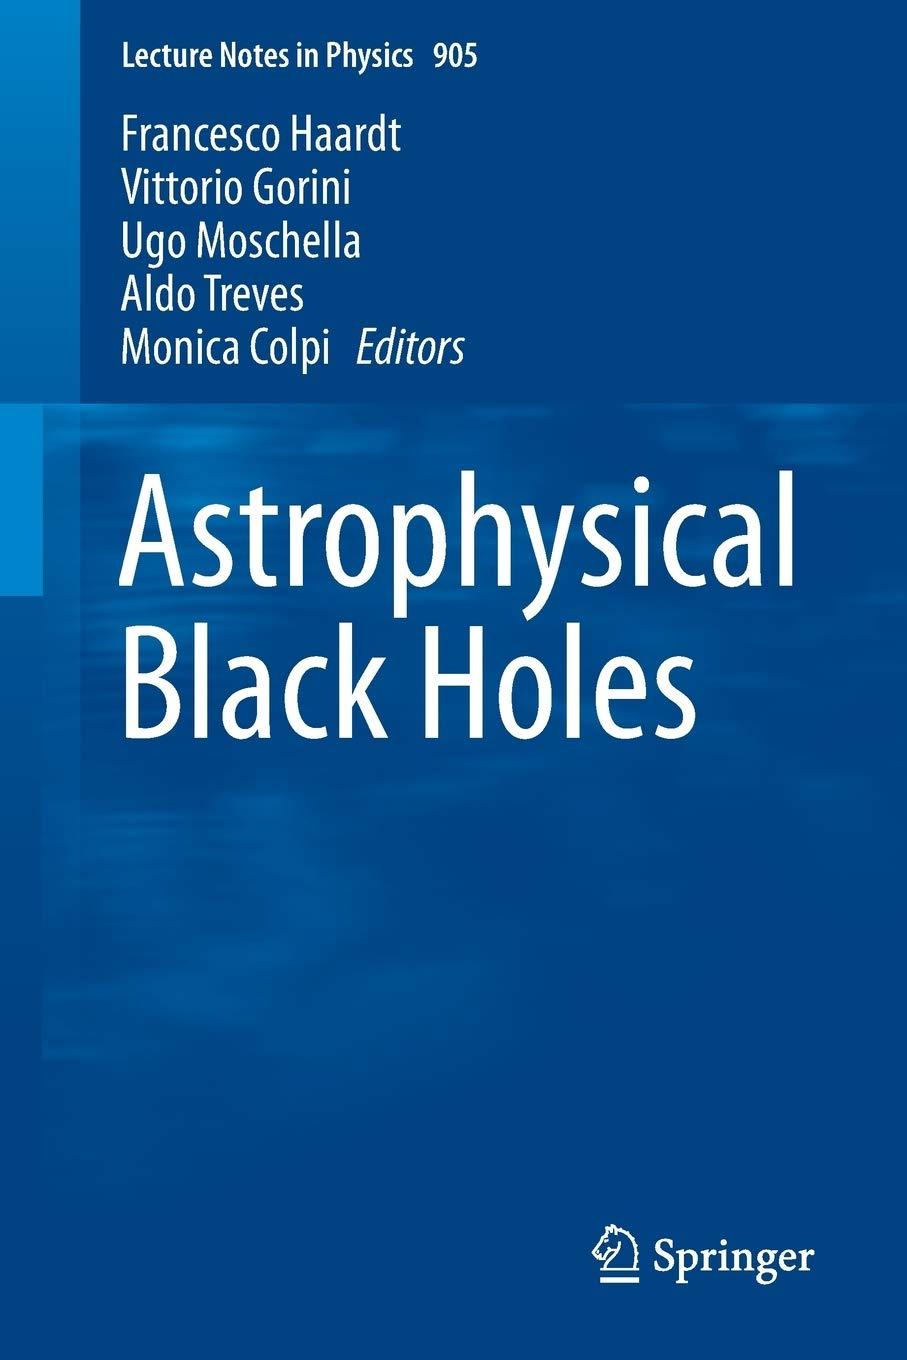 astrophysical black holes 1st edition francesco haardt, vittorio gorini , ugo moschella, aldo treves, monica